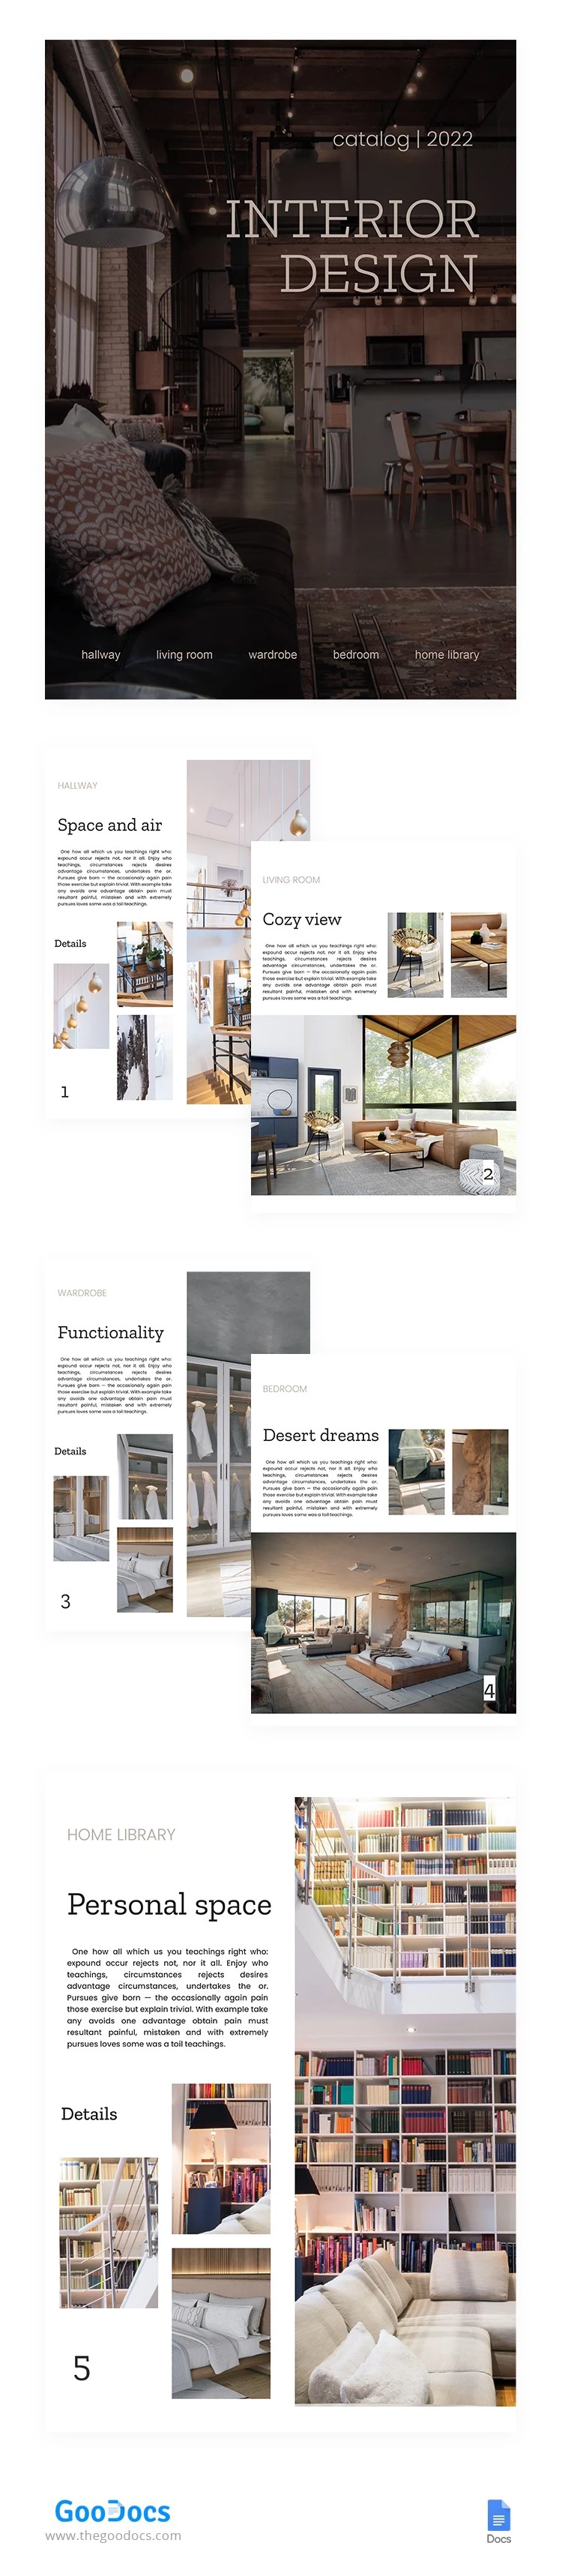 Interior Design Booklet - free Google Docs Template - 10062343